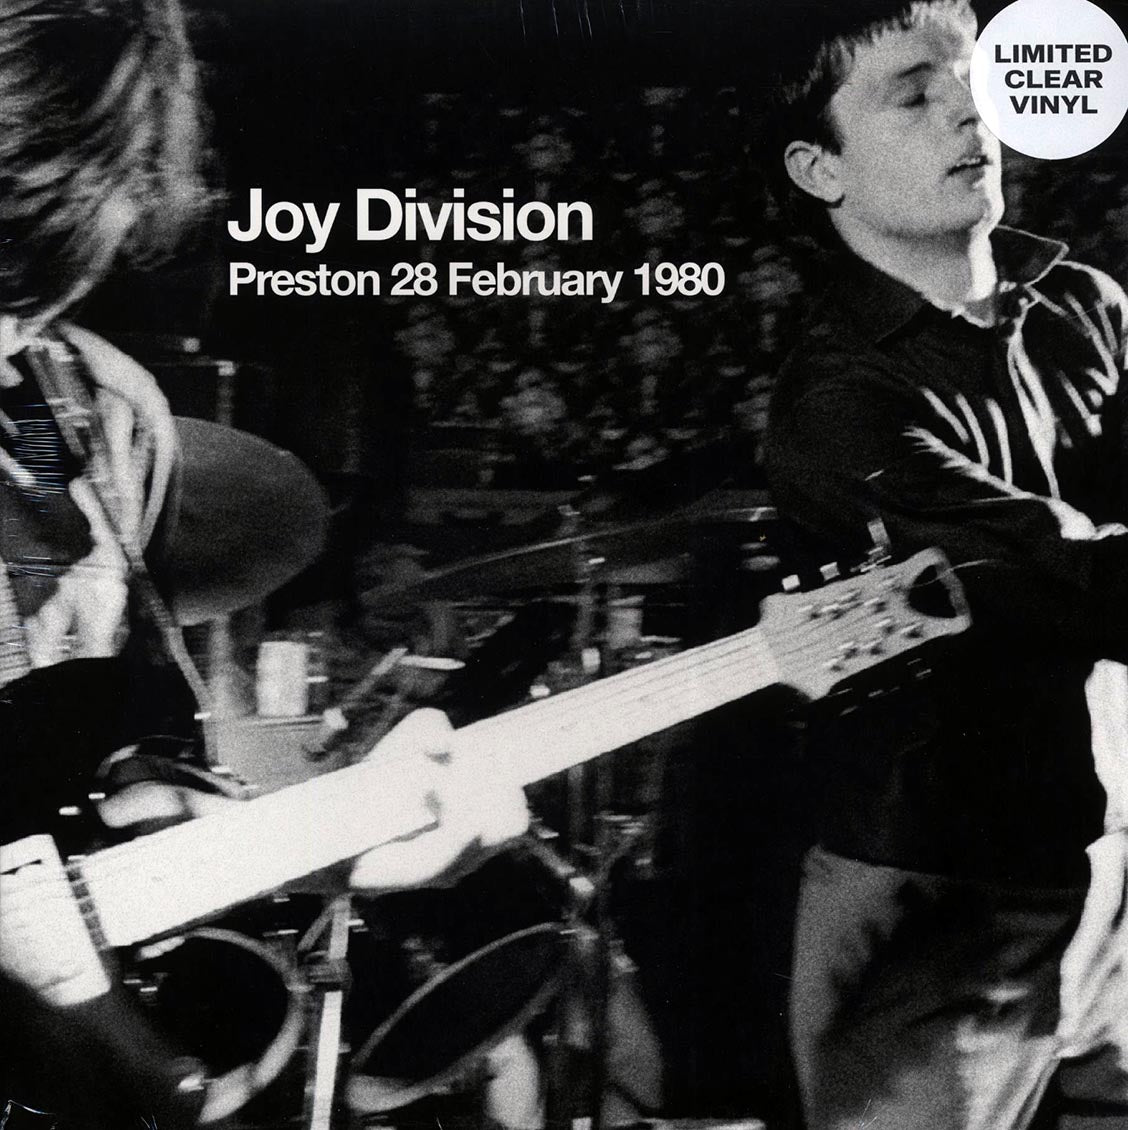 Joy Division - Preston 28 February 1980 (ltd. ed.) (colored vinyl) - Vinyl LP